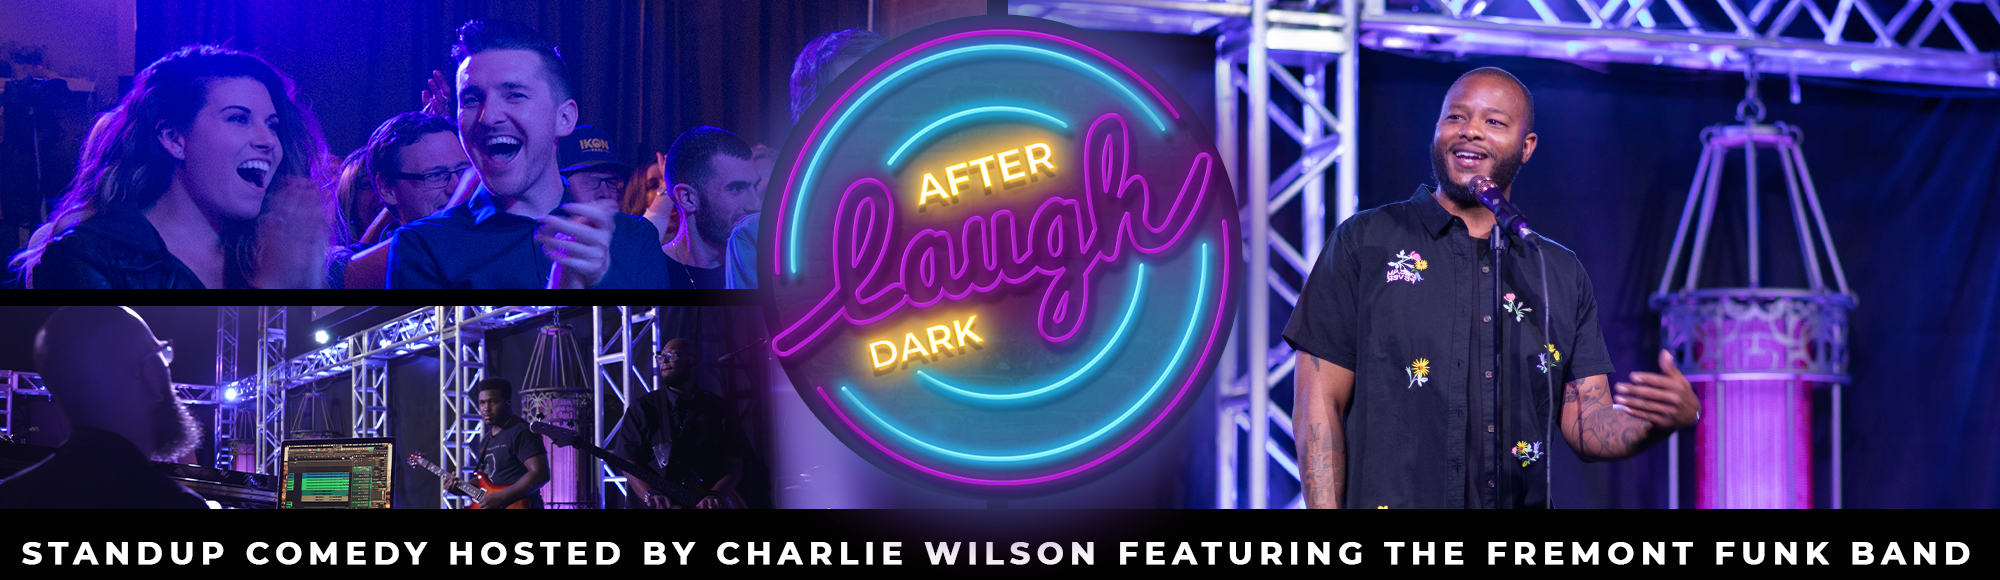 Laugh After Dark show